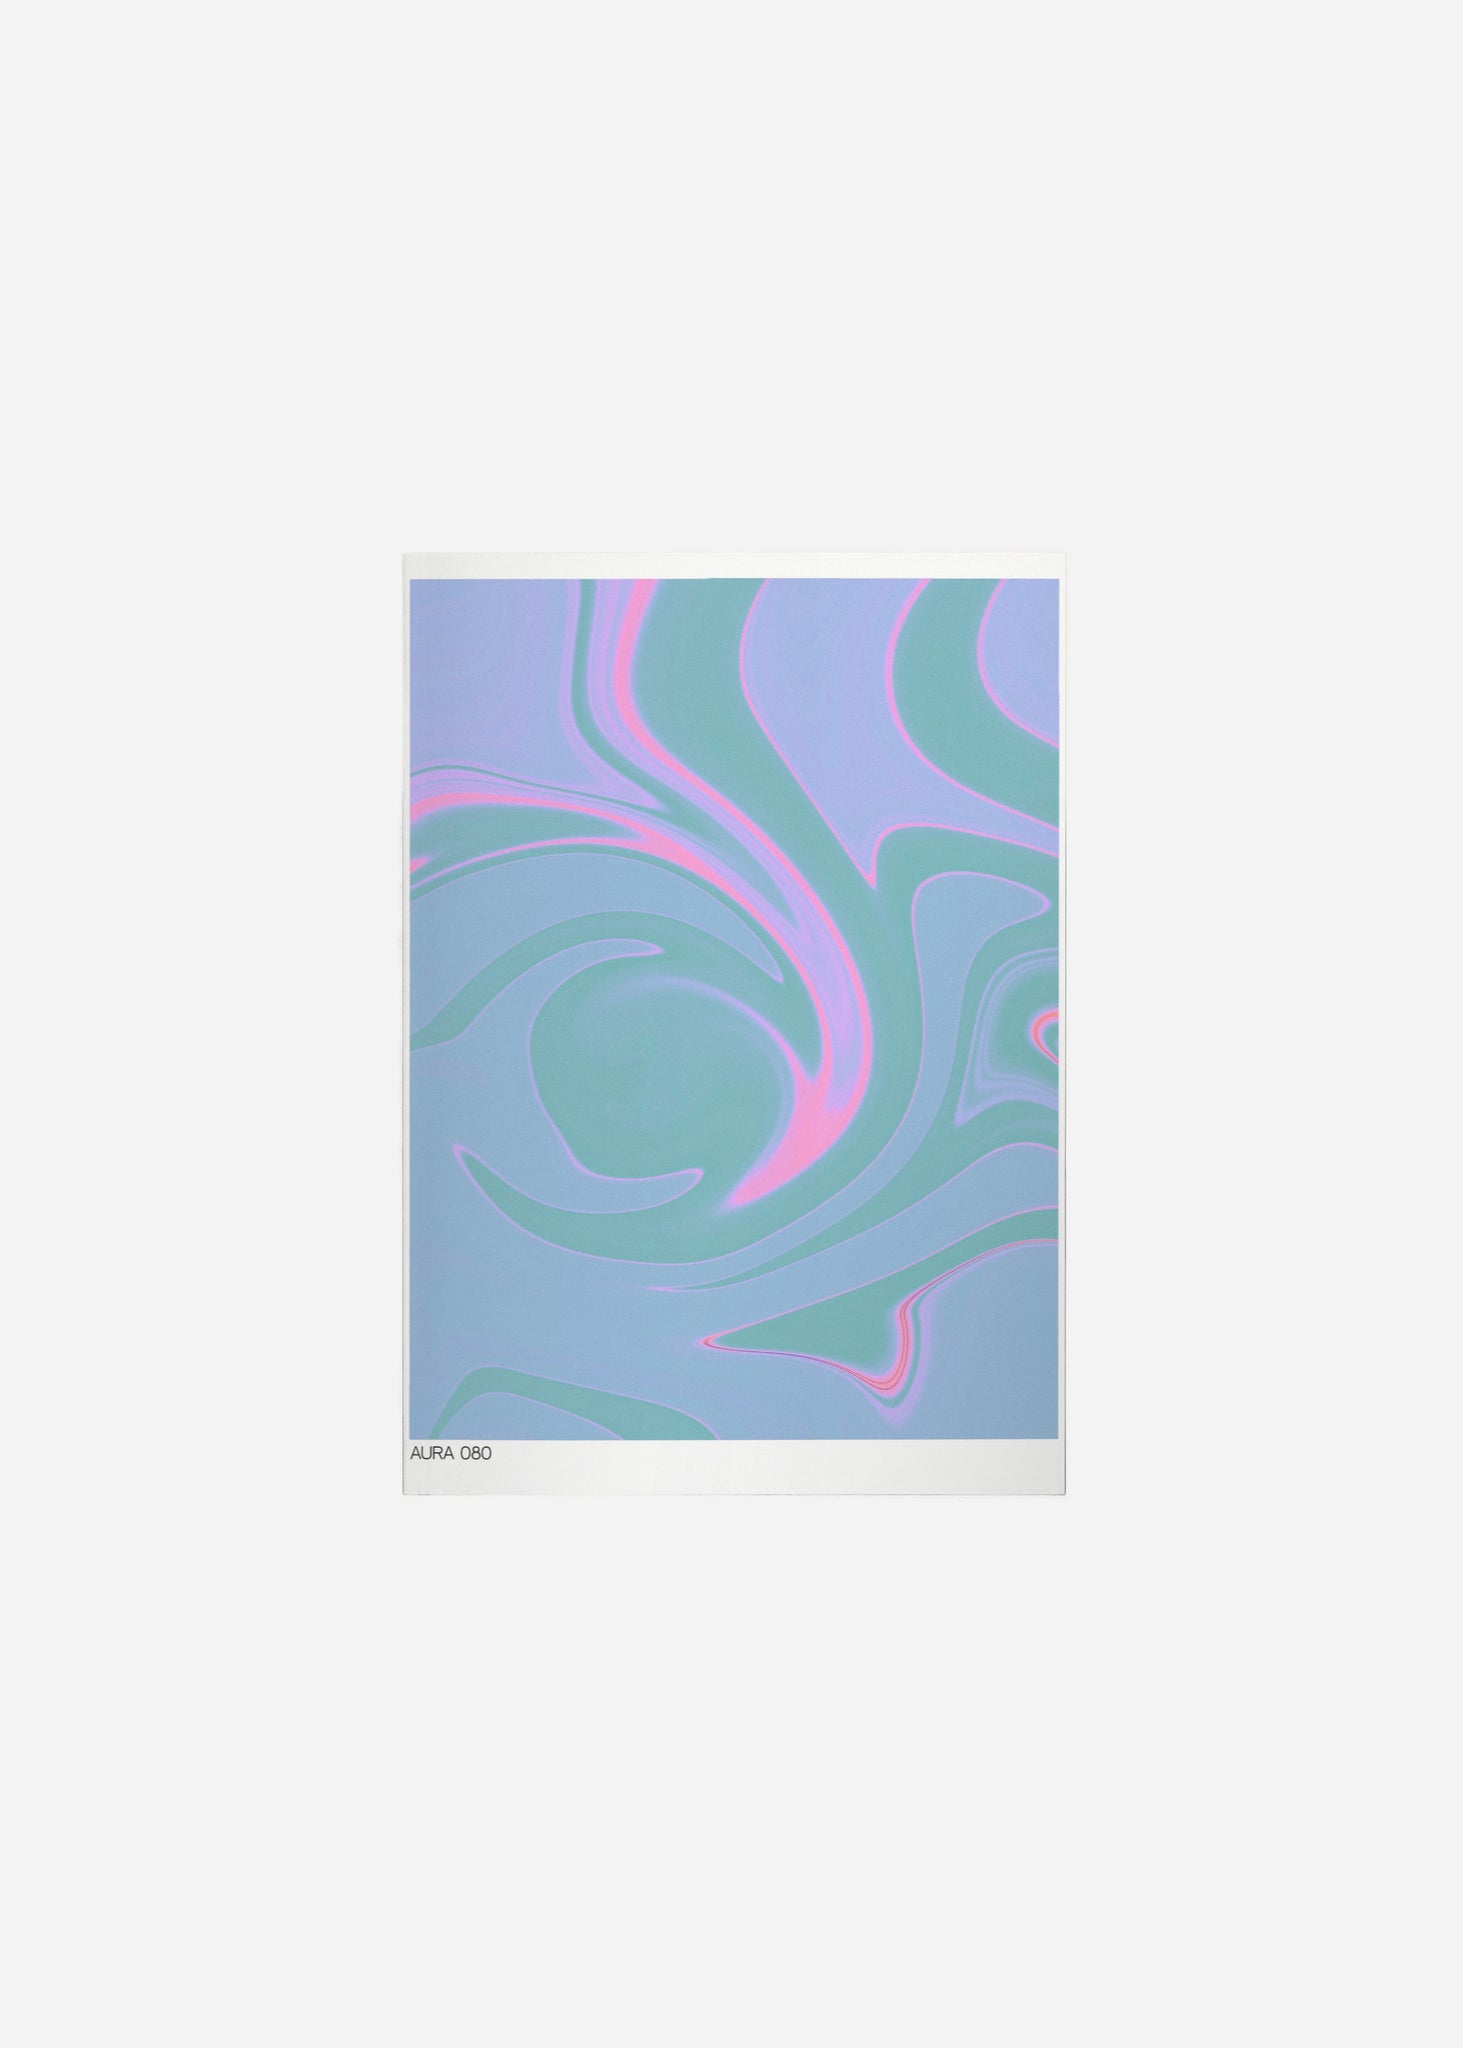 aura 080 Fine Art Print